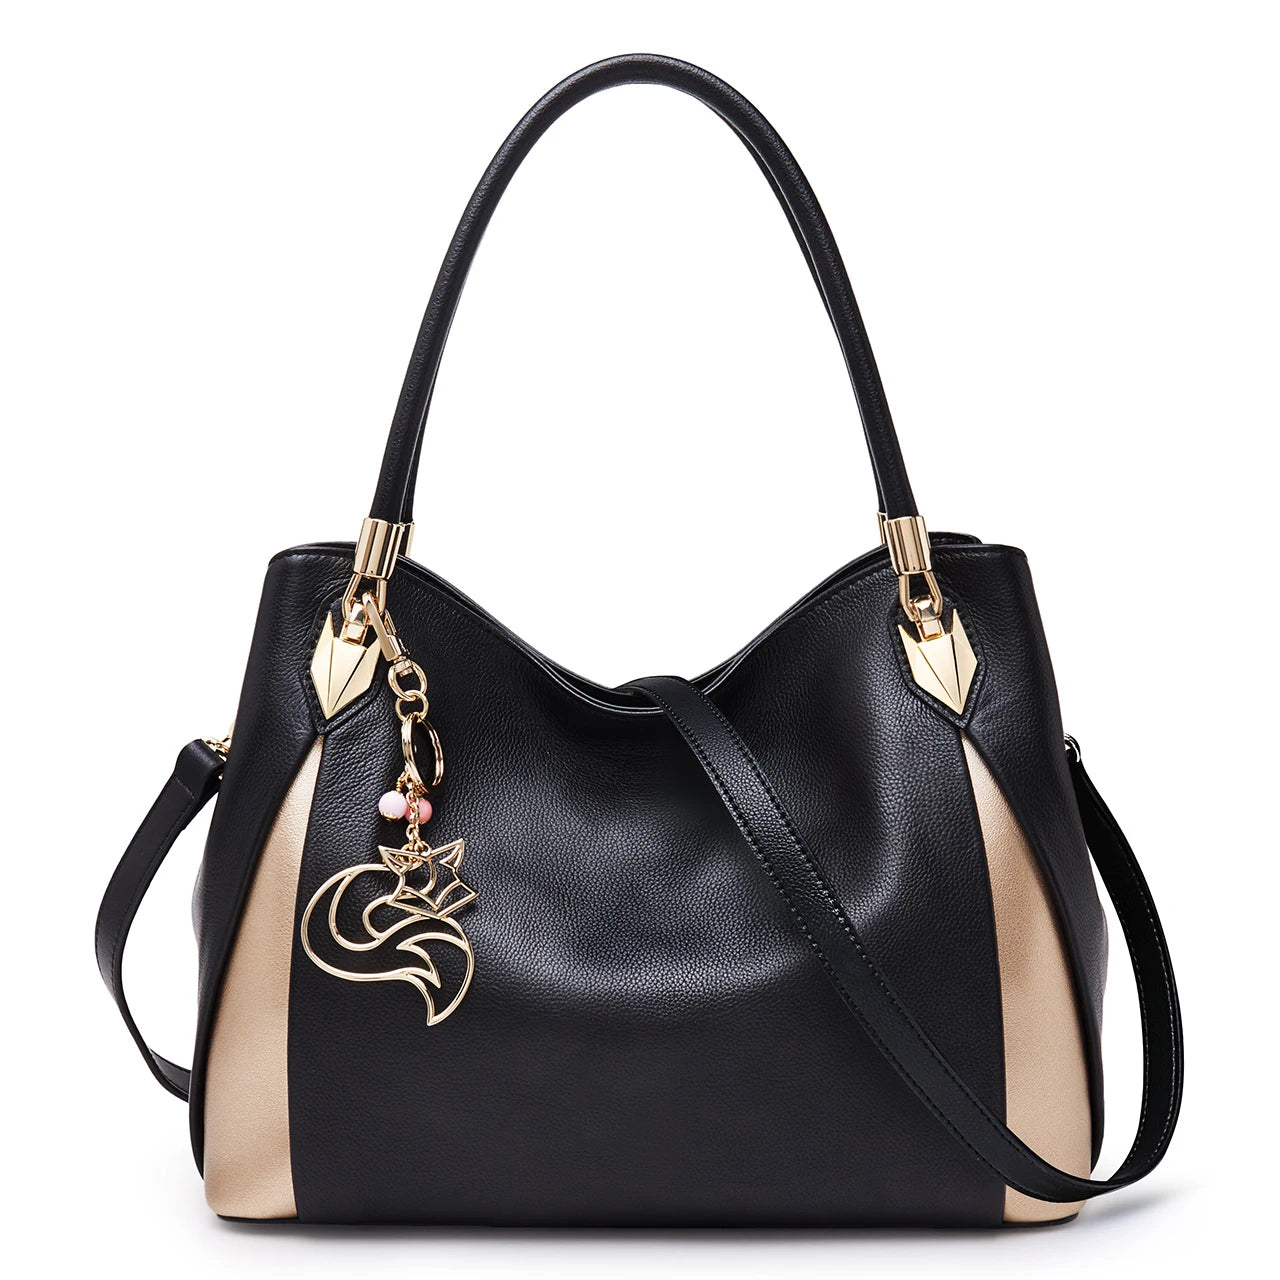 FOXER Women's Cowhide Handbag Female Genuine Leather Black